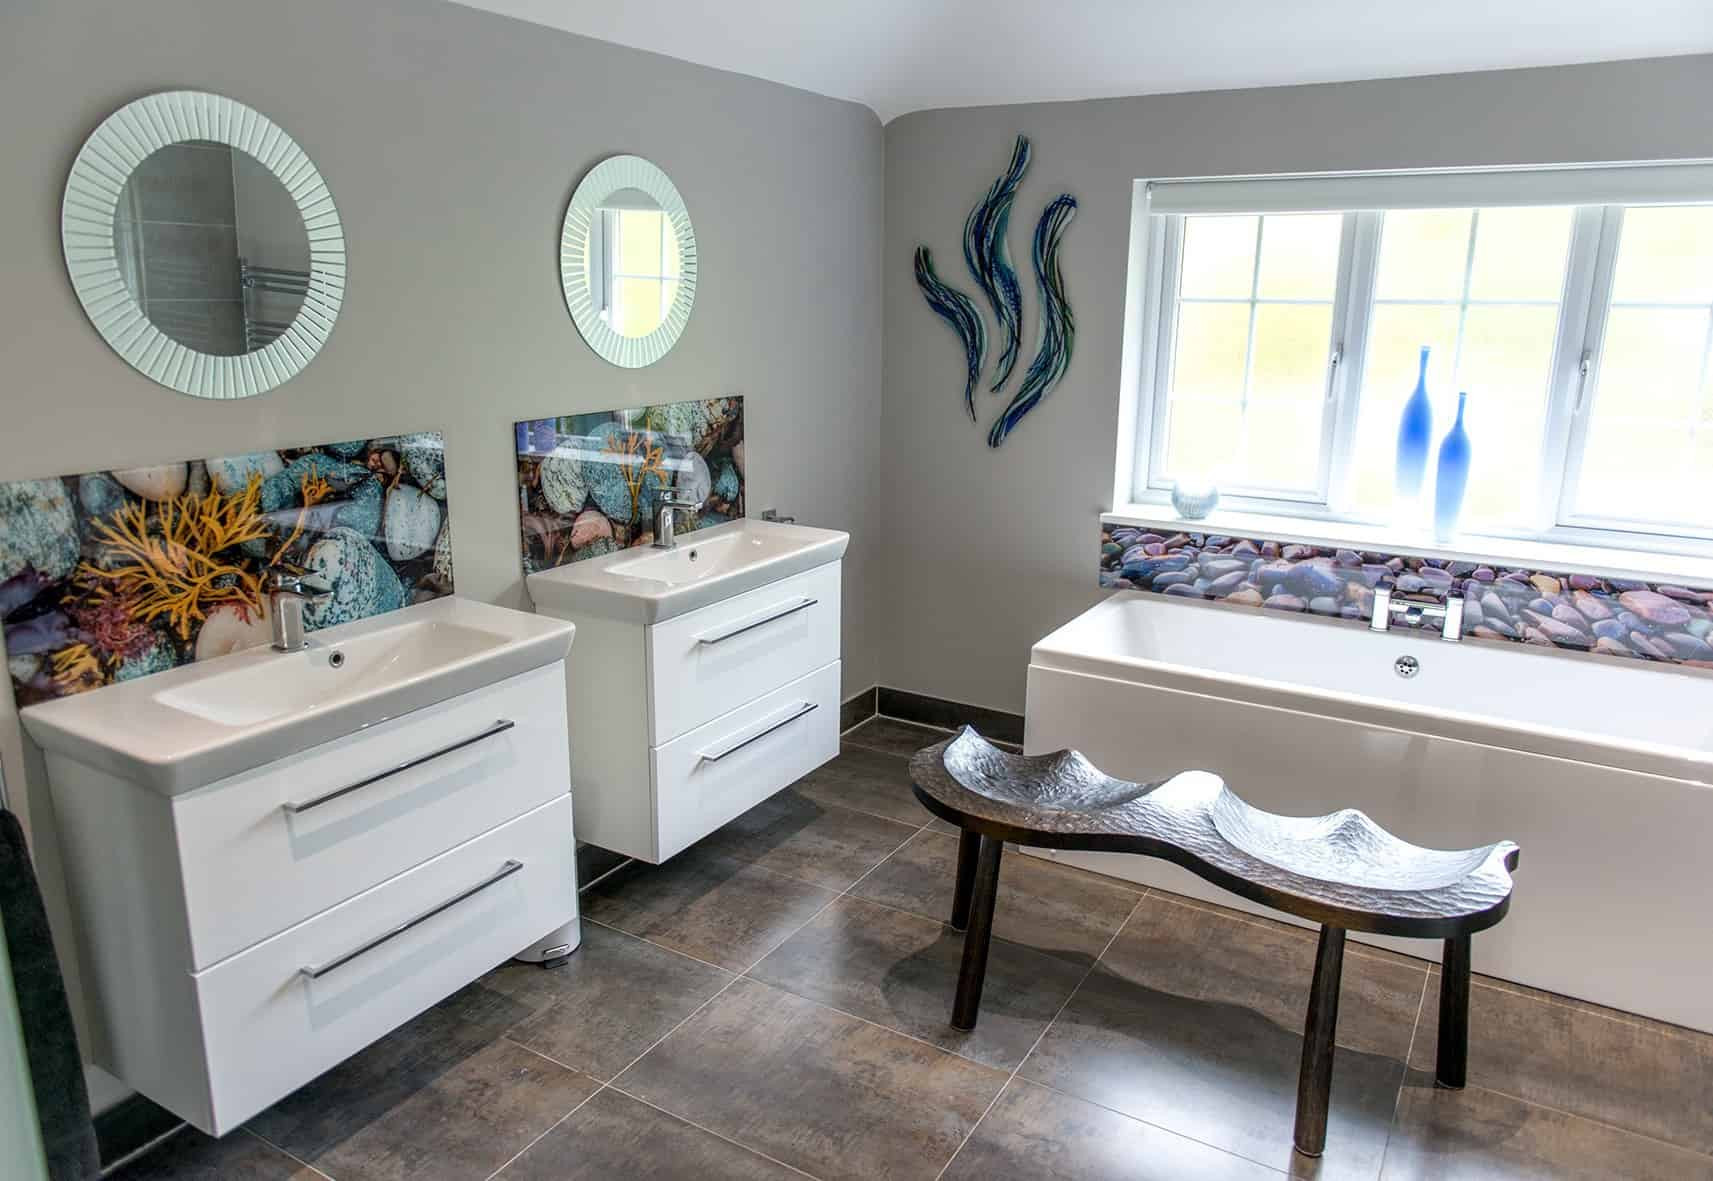 Bathroom Glass Wall
 Bathrooms with glass shower walls & glass splashbacks